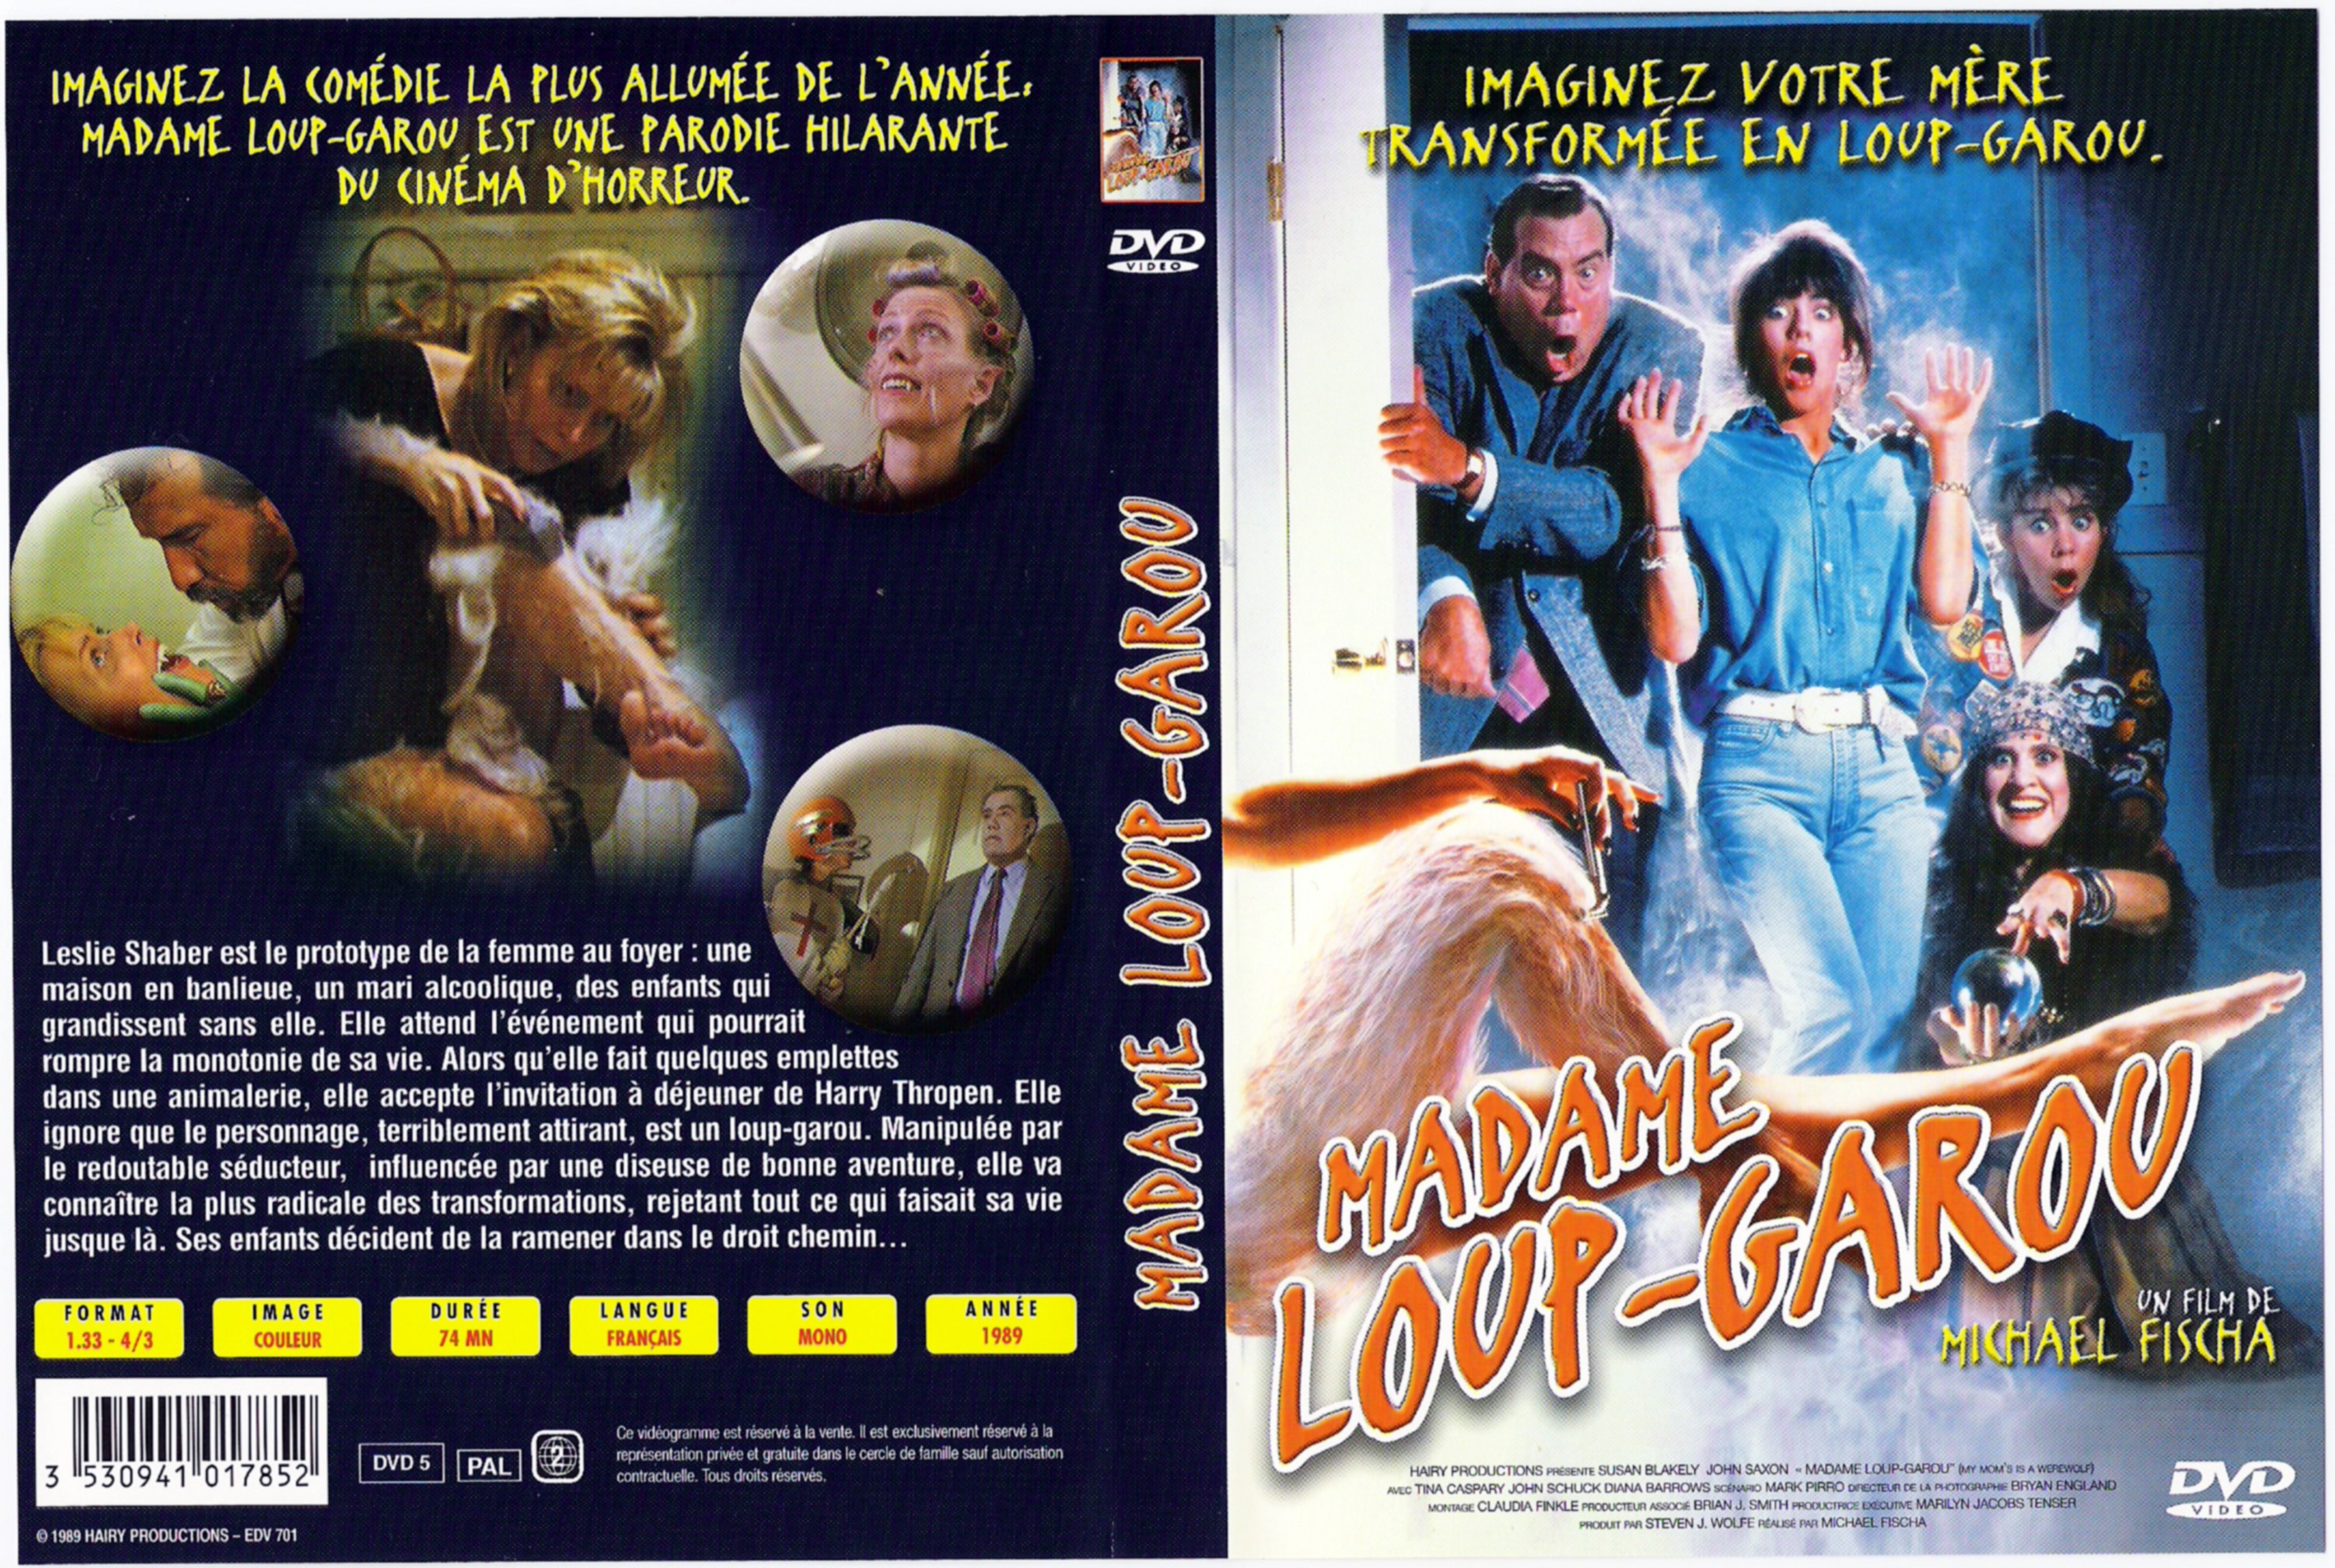 Jaquette DVD Madame loup-garou